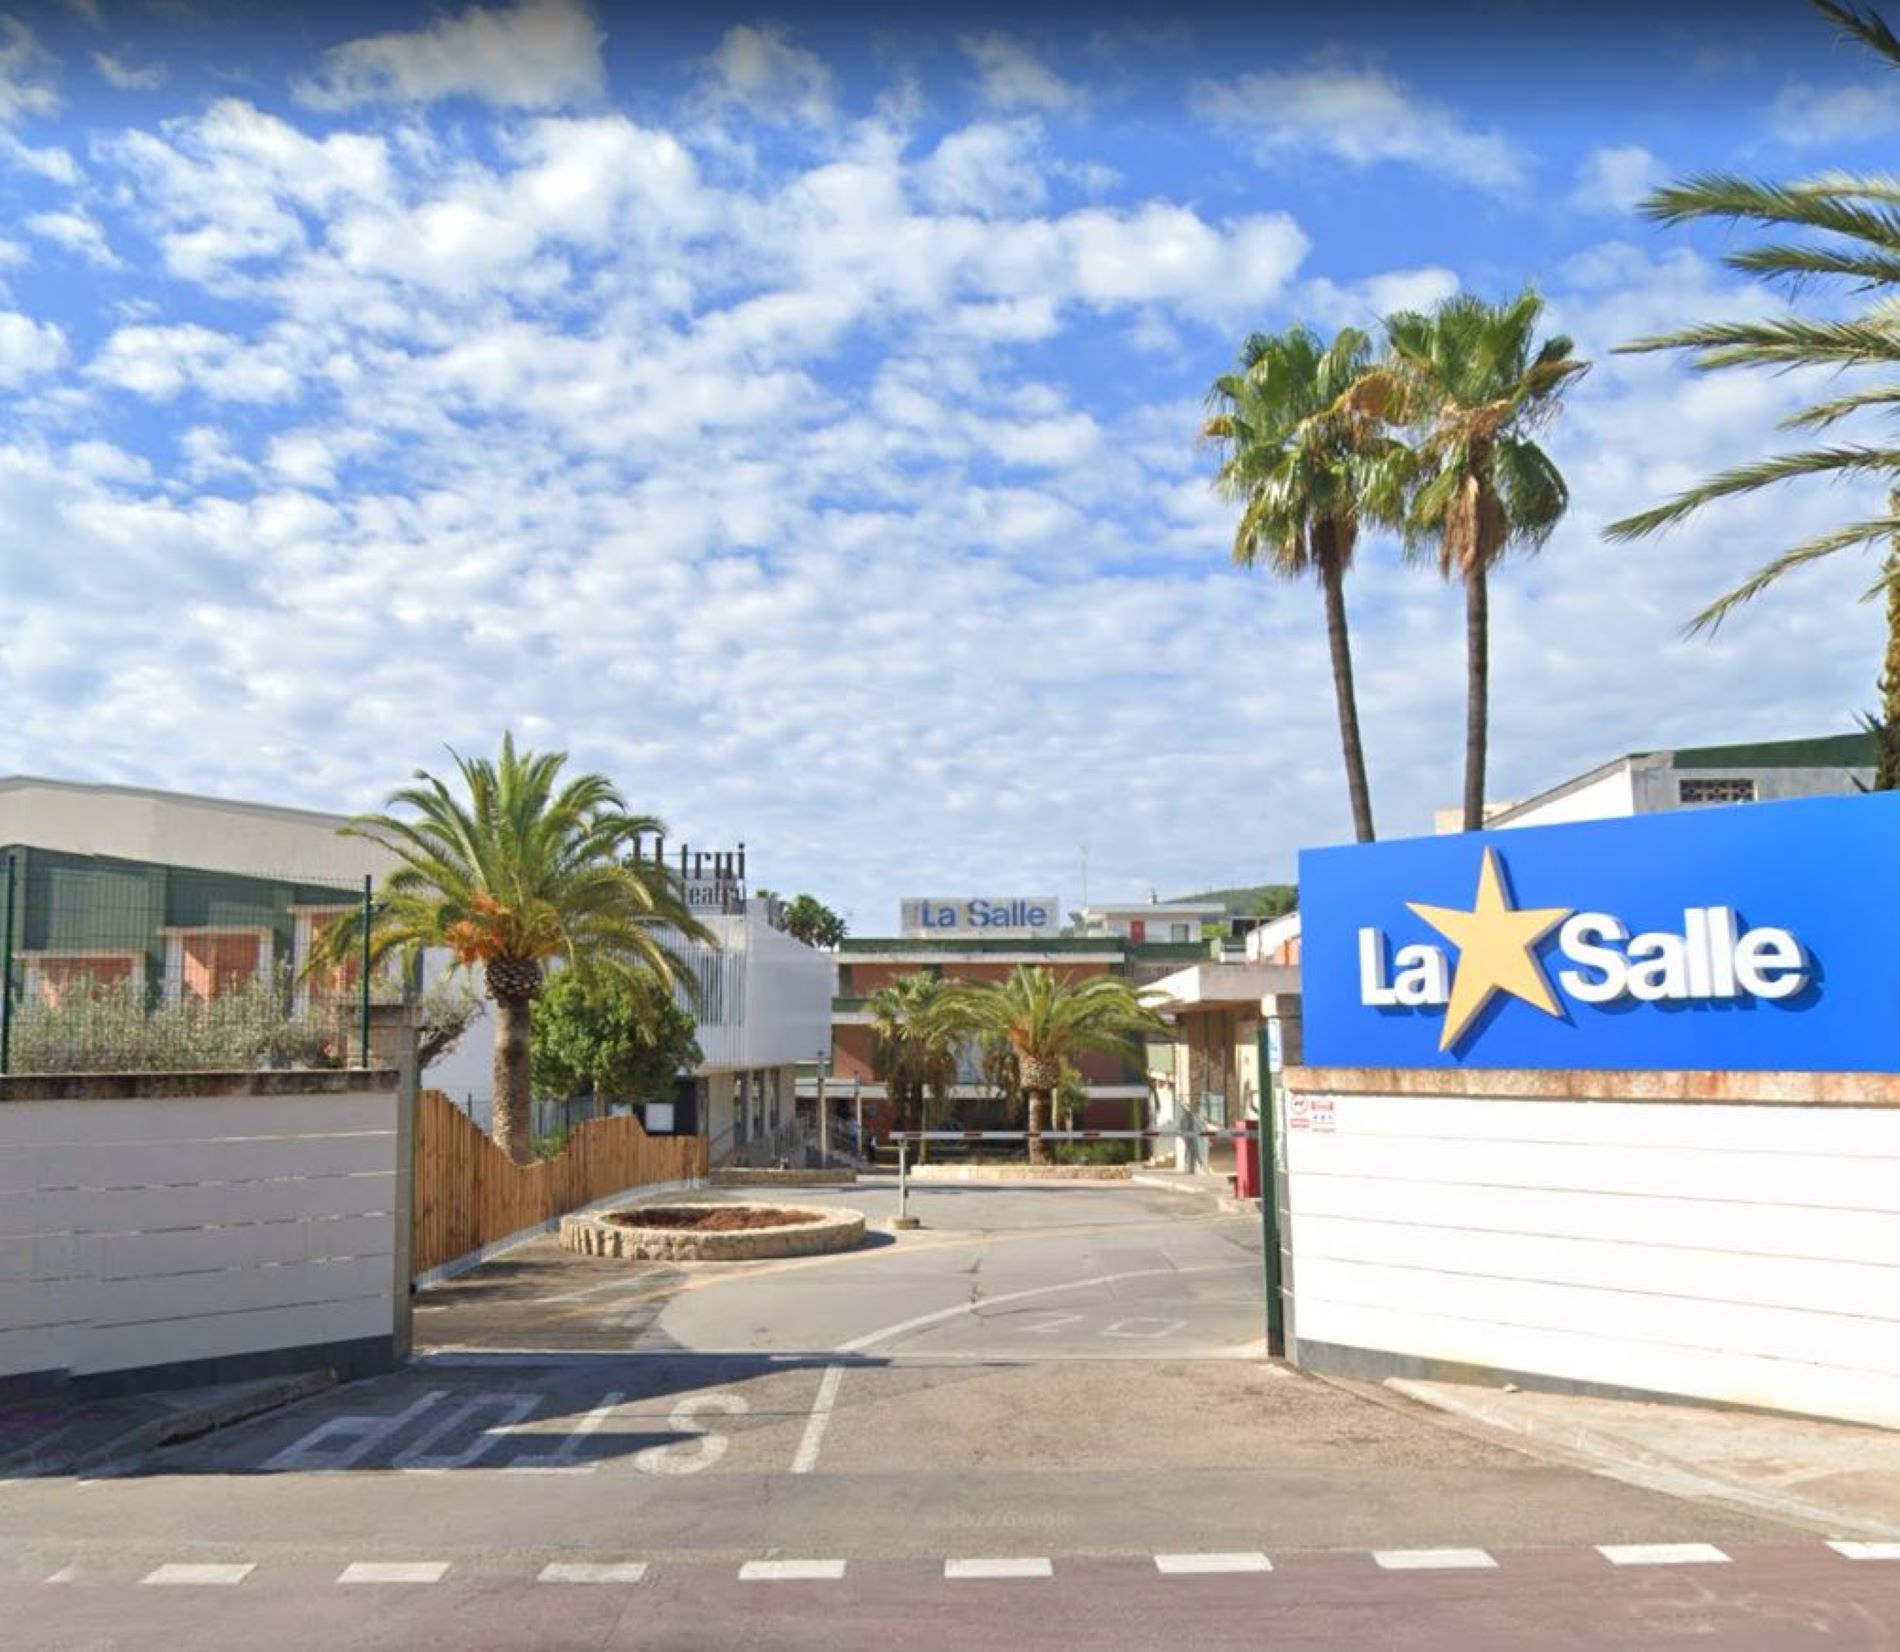 La Salle Palma, Google Maps